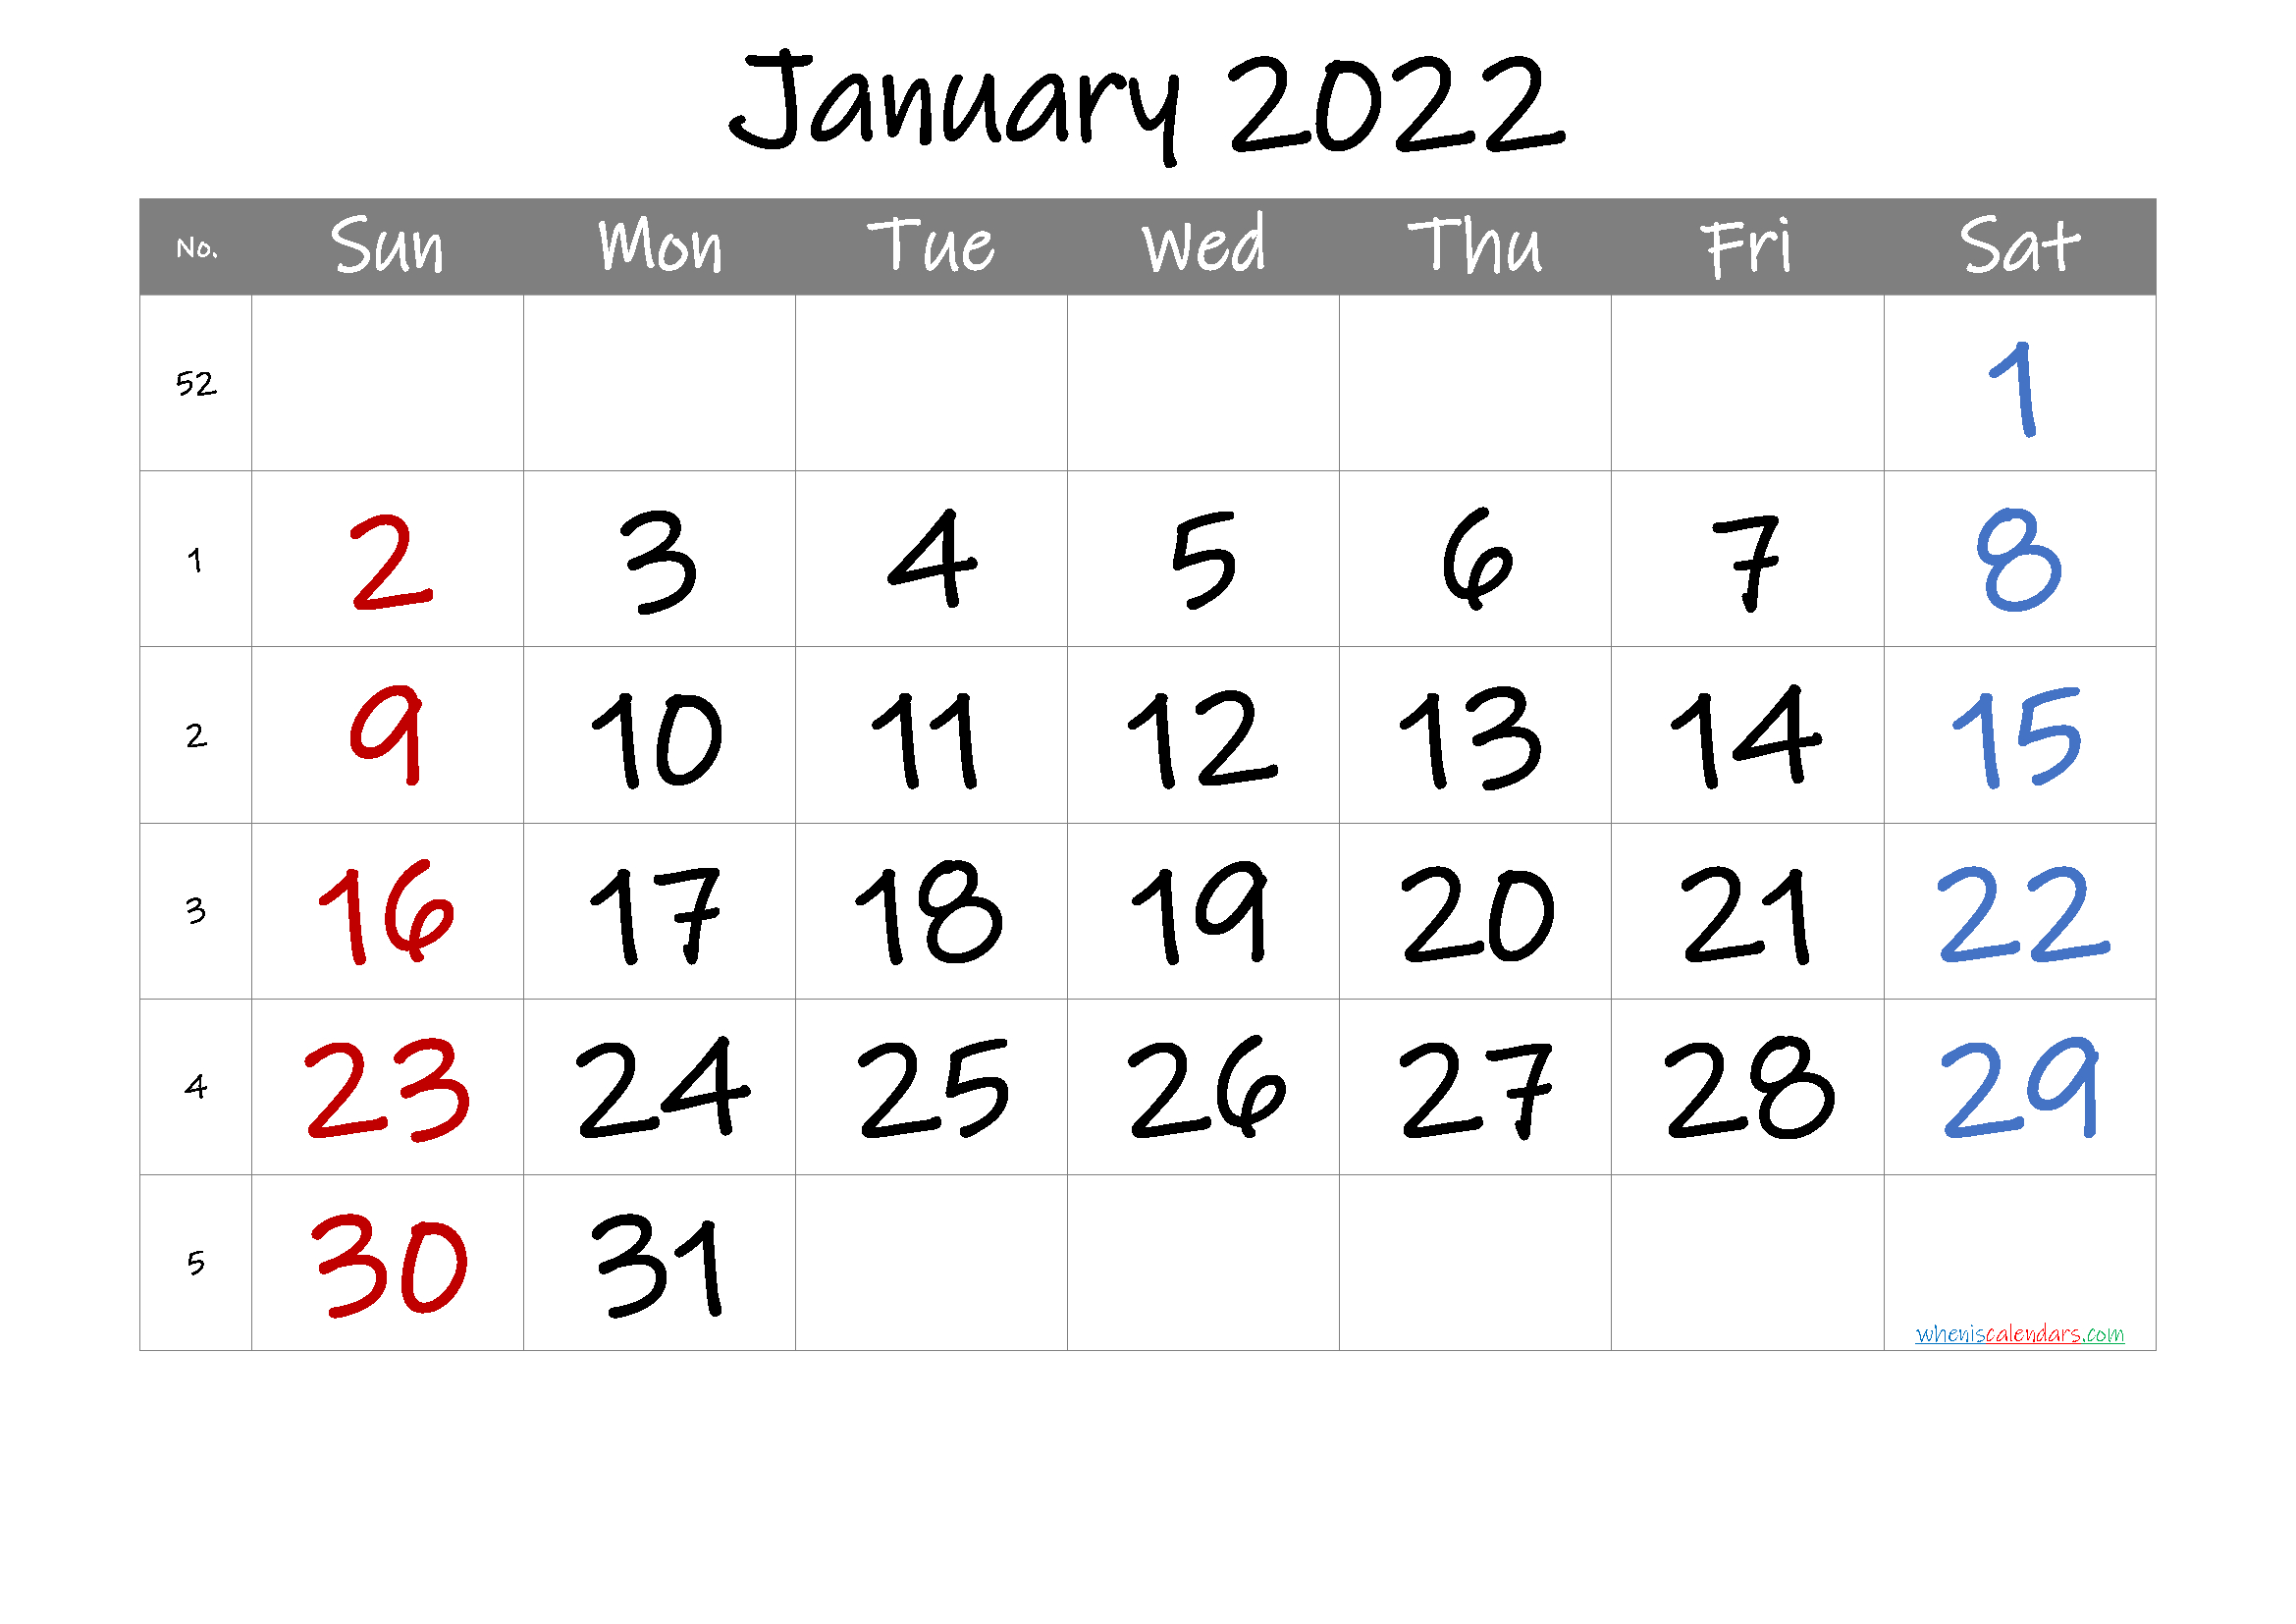 Get Lunar Calendar October 2022